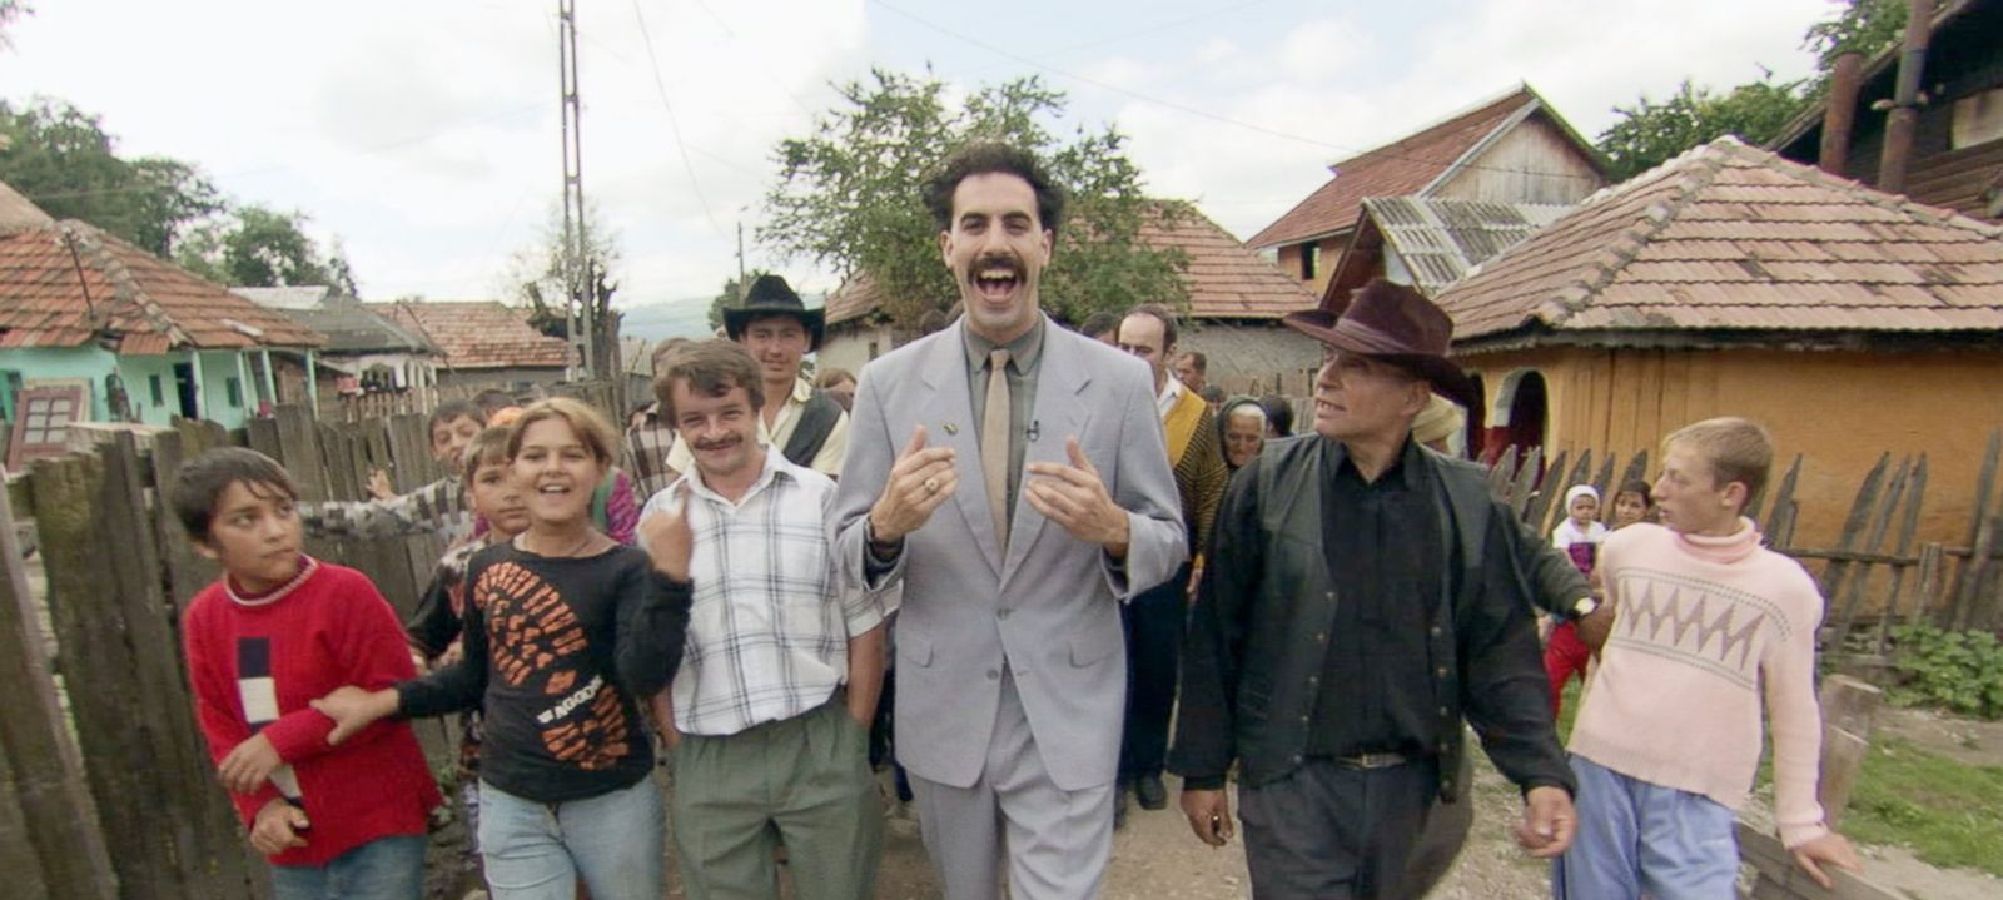 Sacha Baron Cohen as Borat in Borat